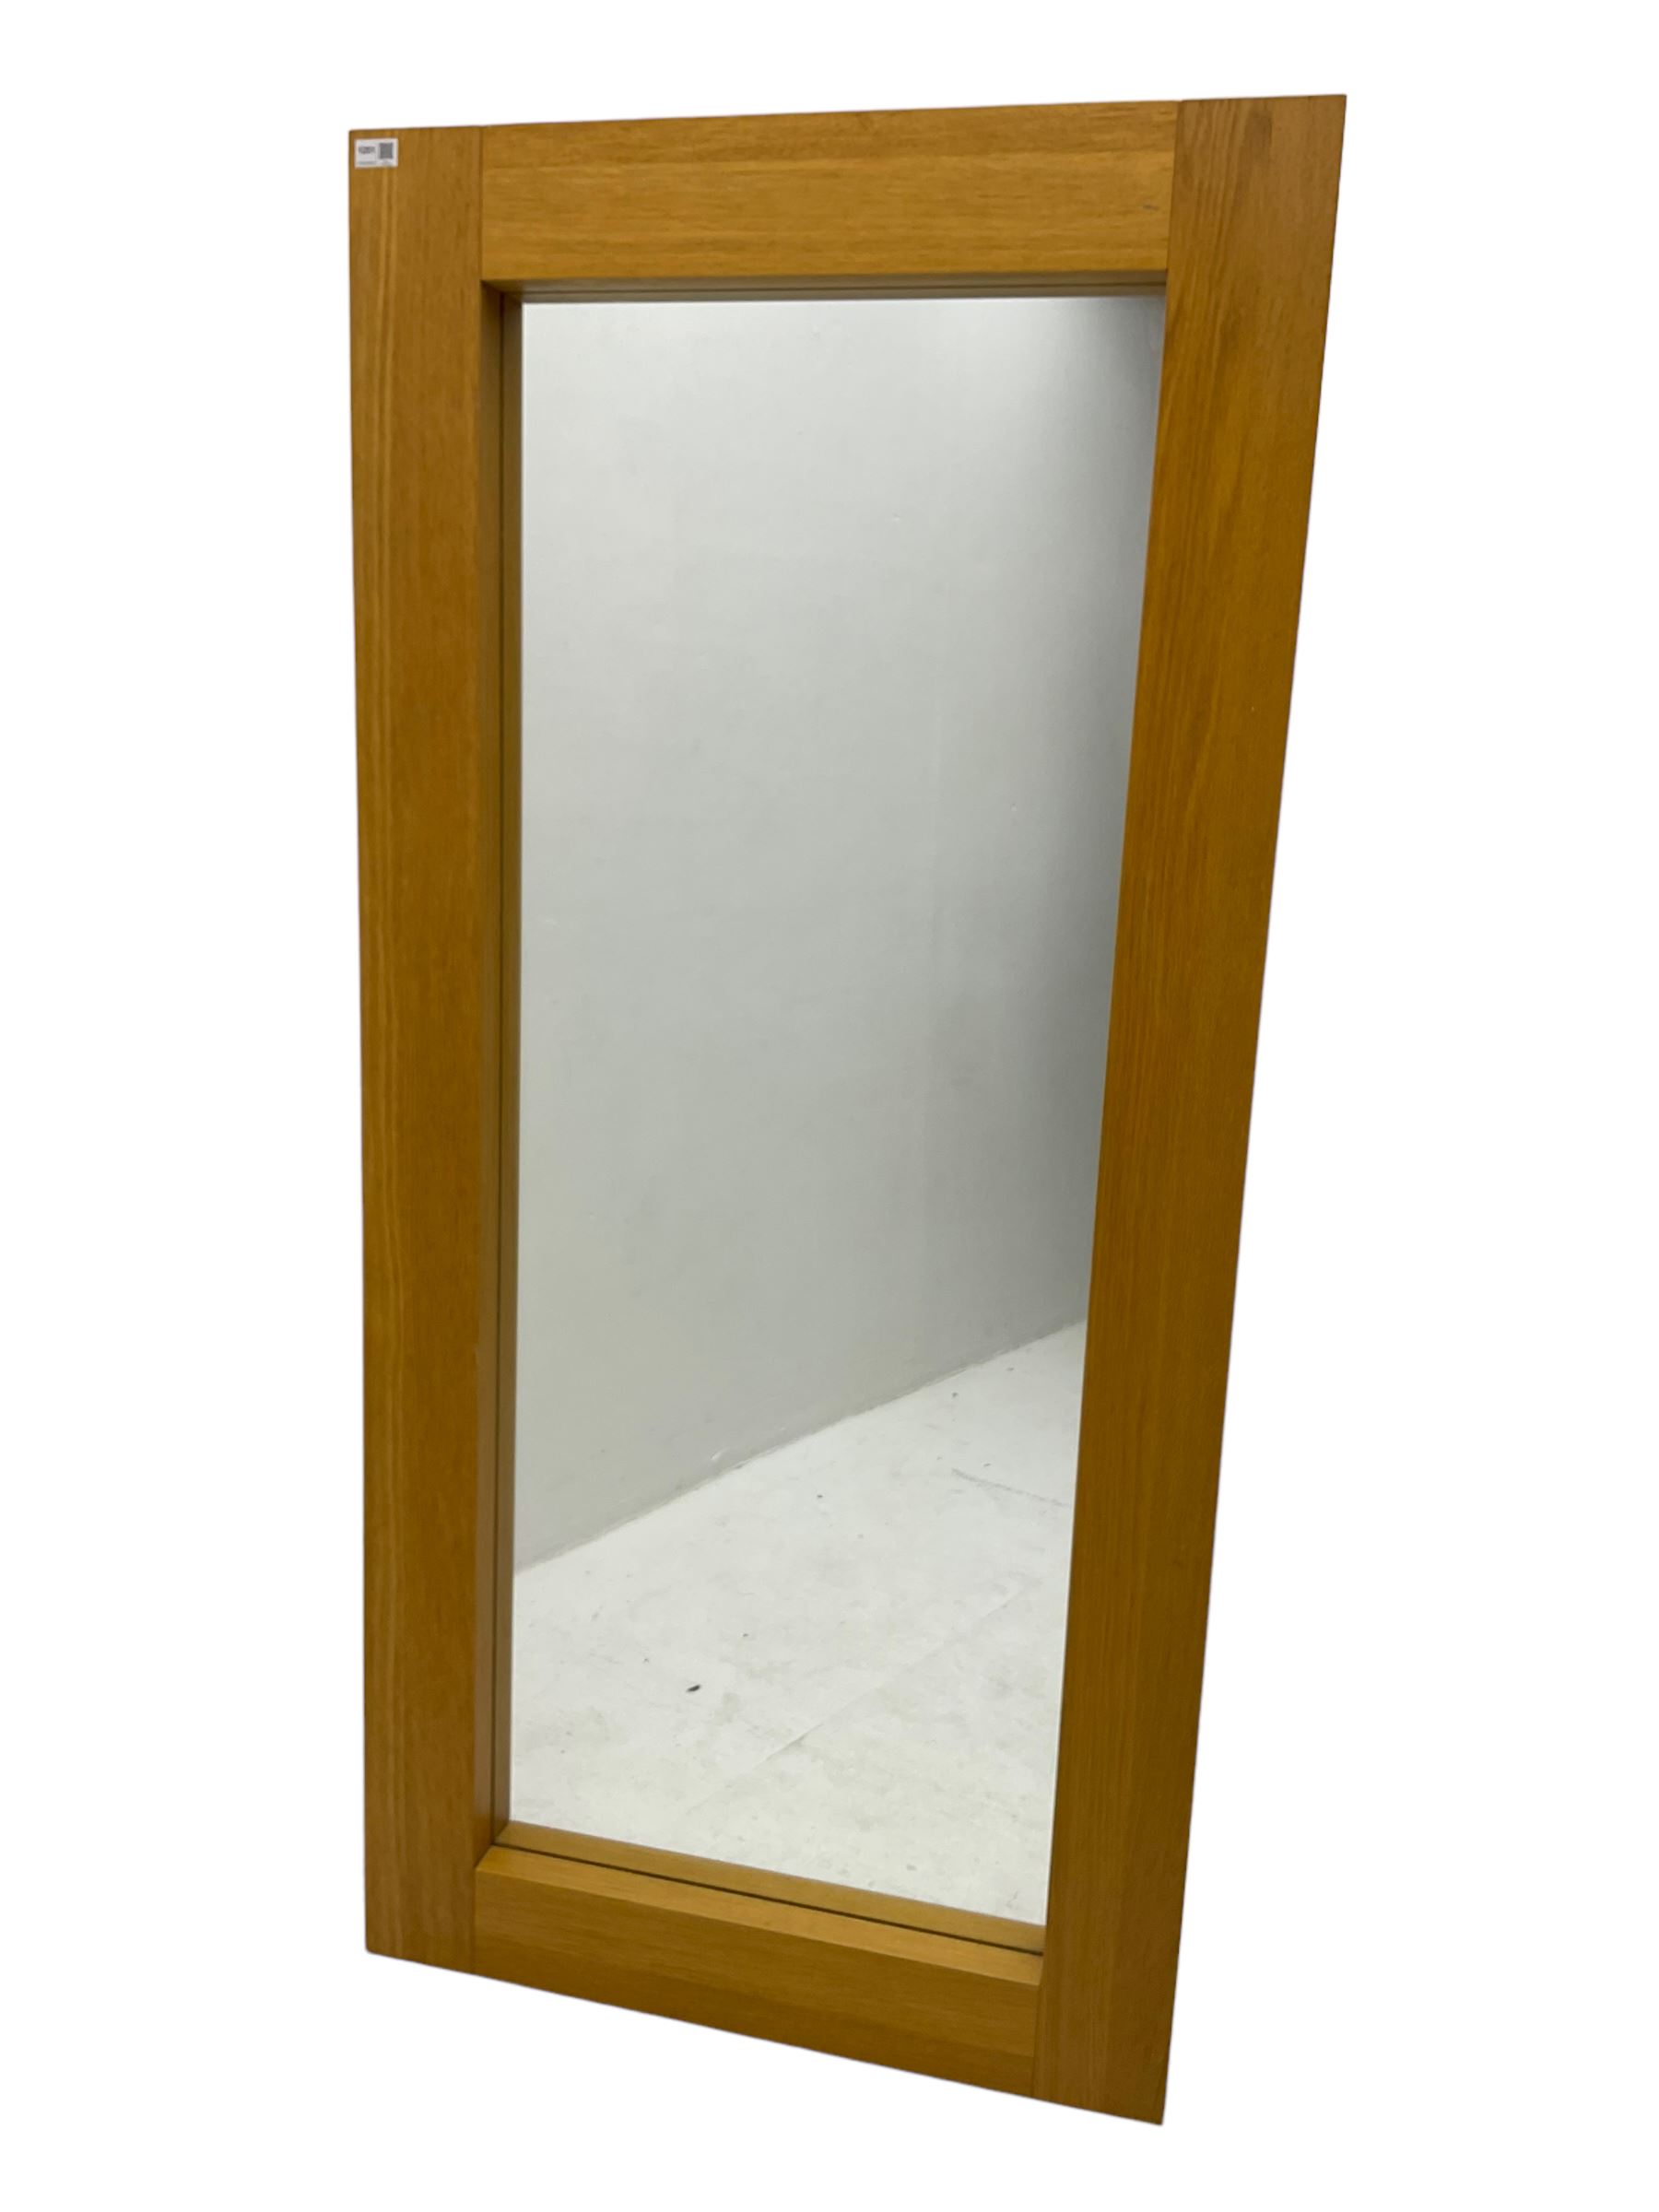 Contemporary oak framed mirror - Image 10 of 10